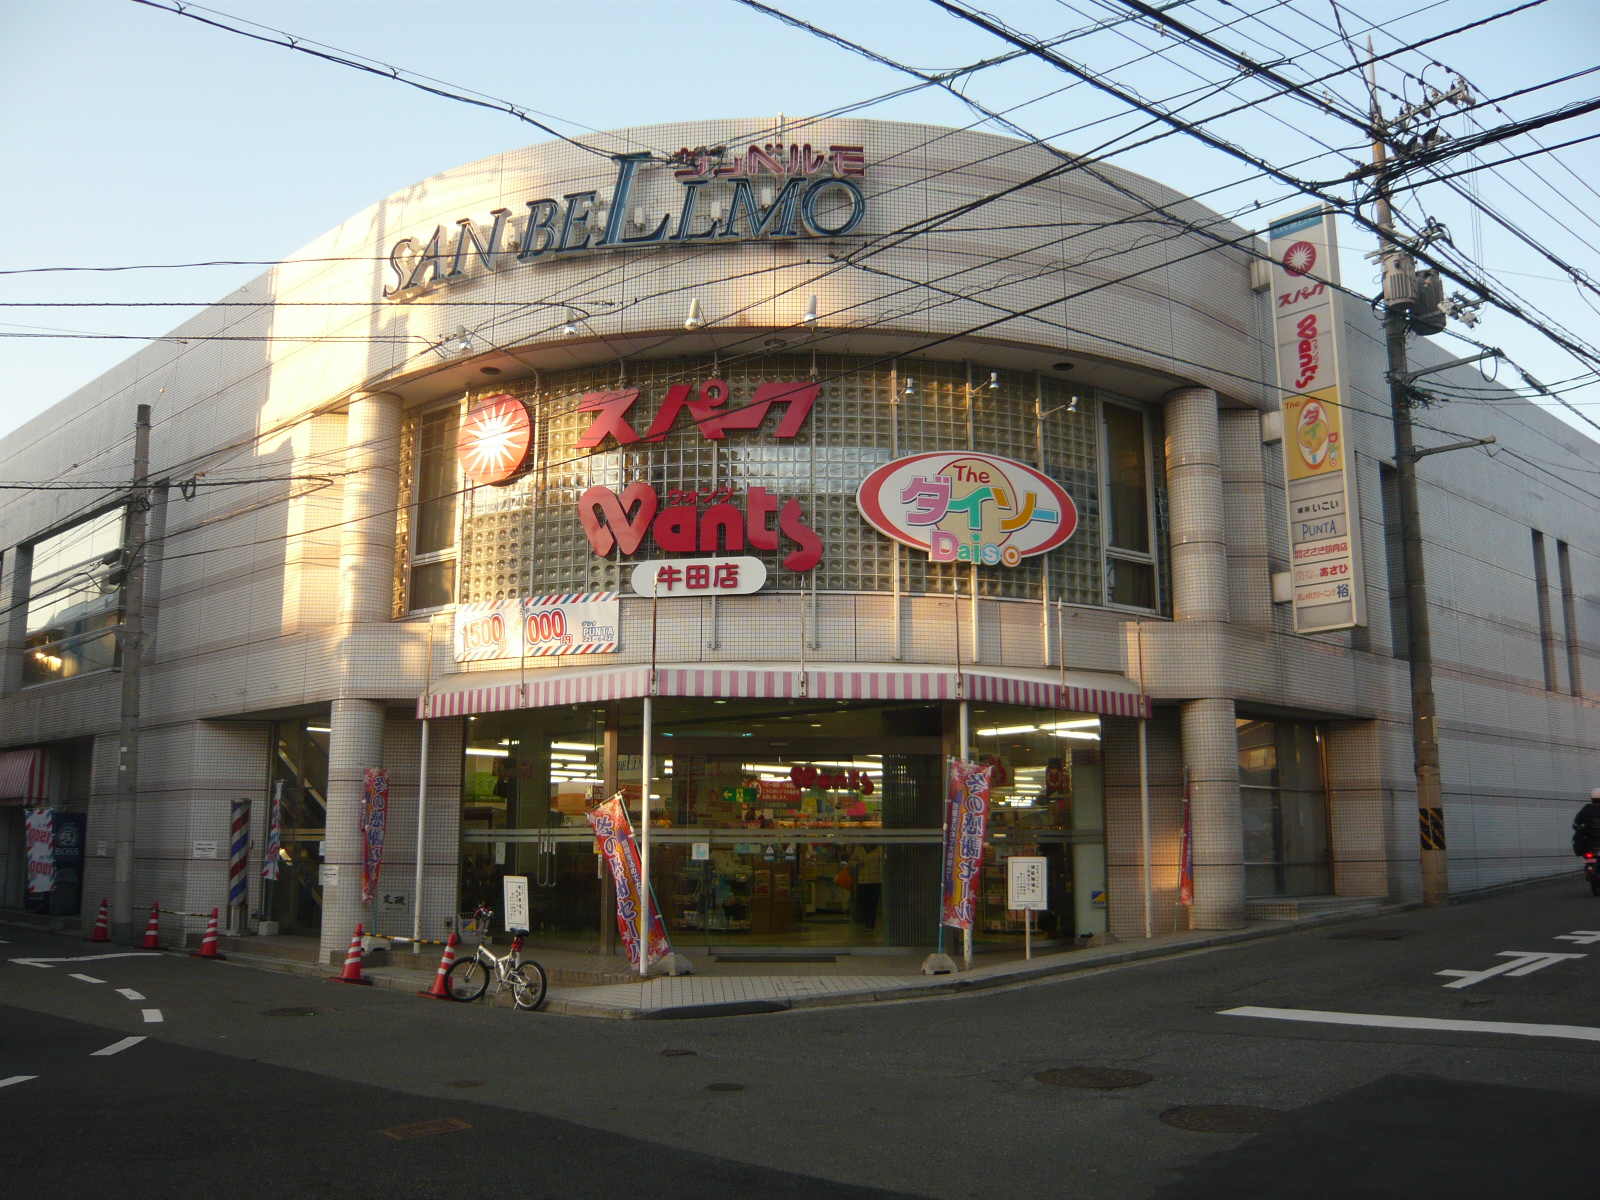 Shopping centre. 150m until Sanberumo (shopping center)